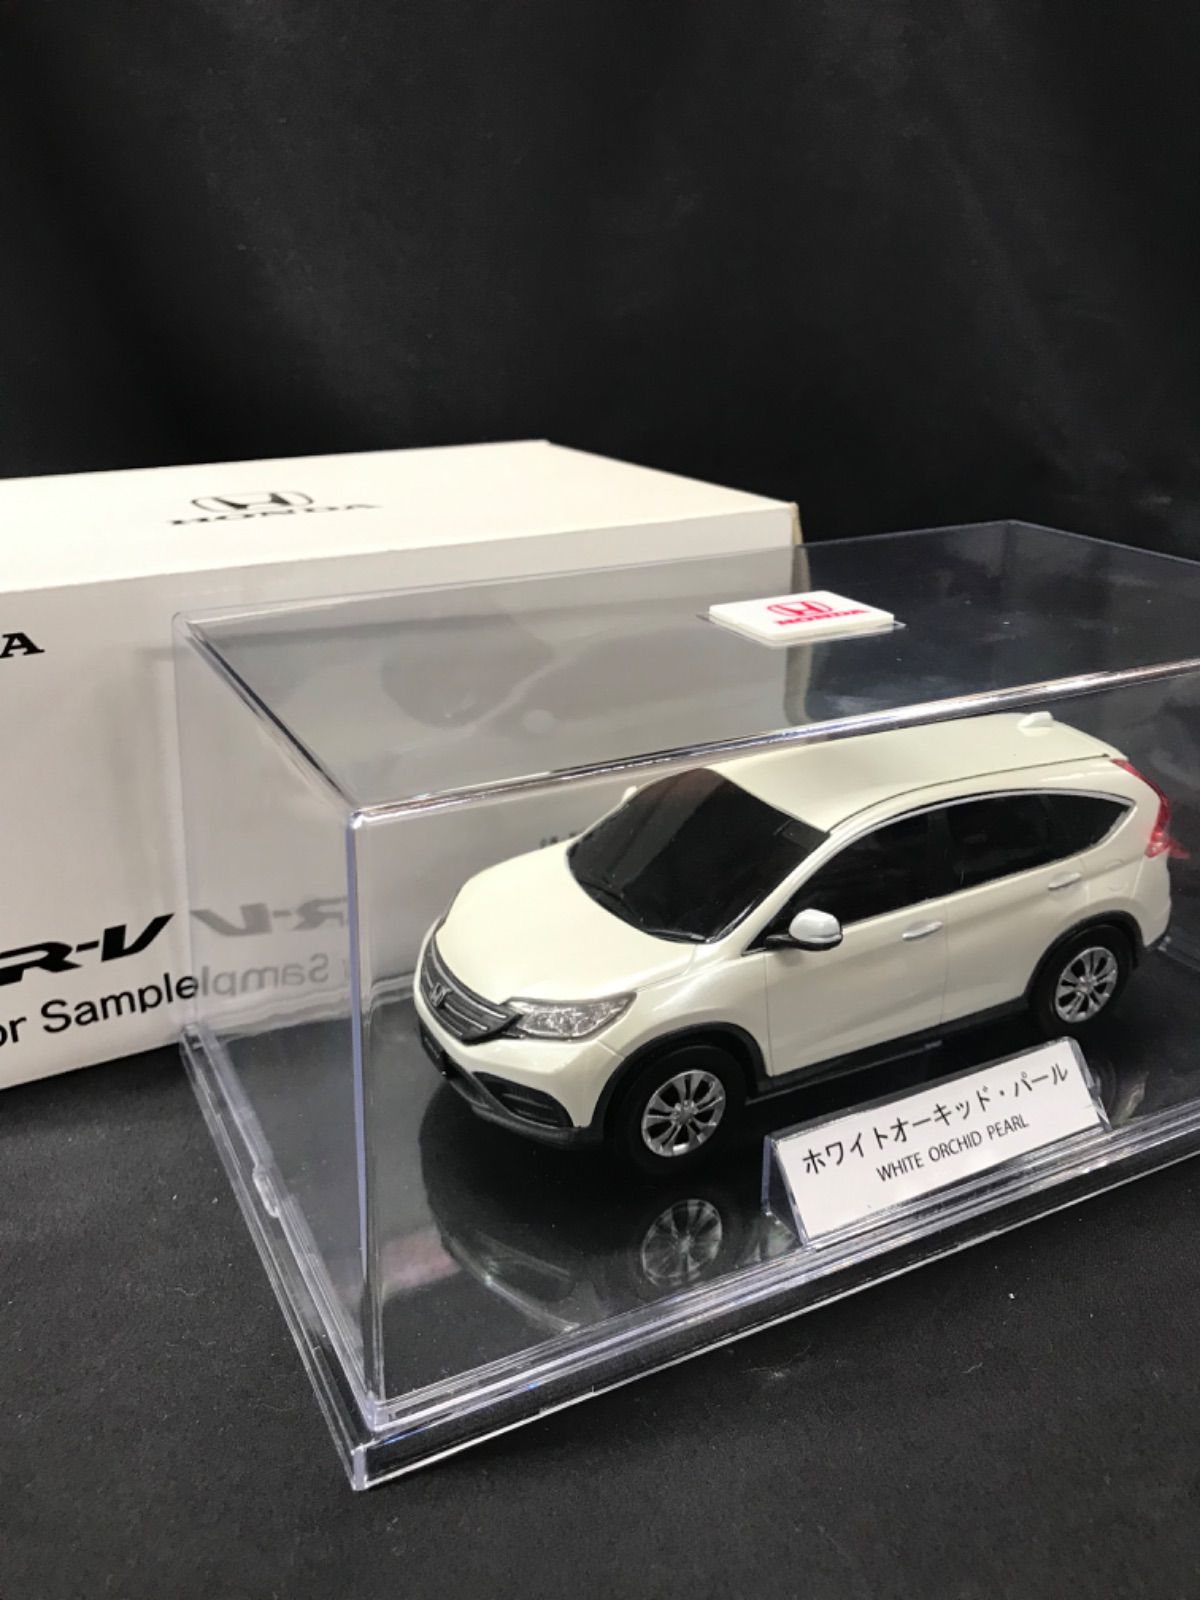 I2【新品】HONDA CR-V カラーサンプル 非売品ミニカー ホワイト 